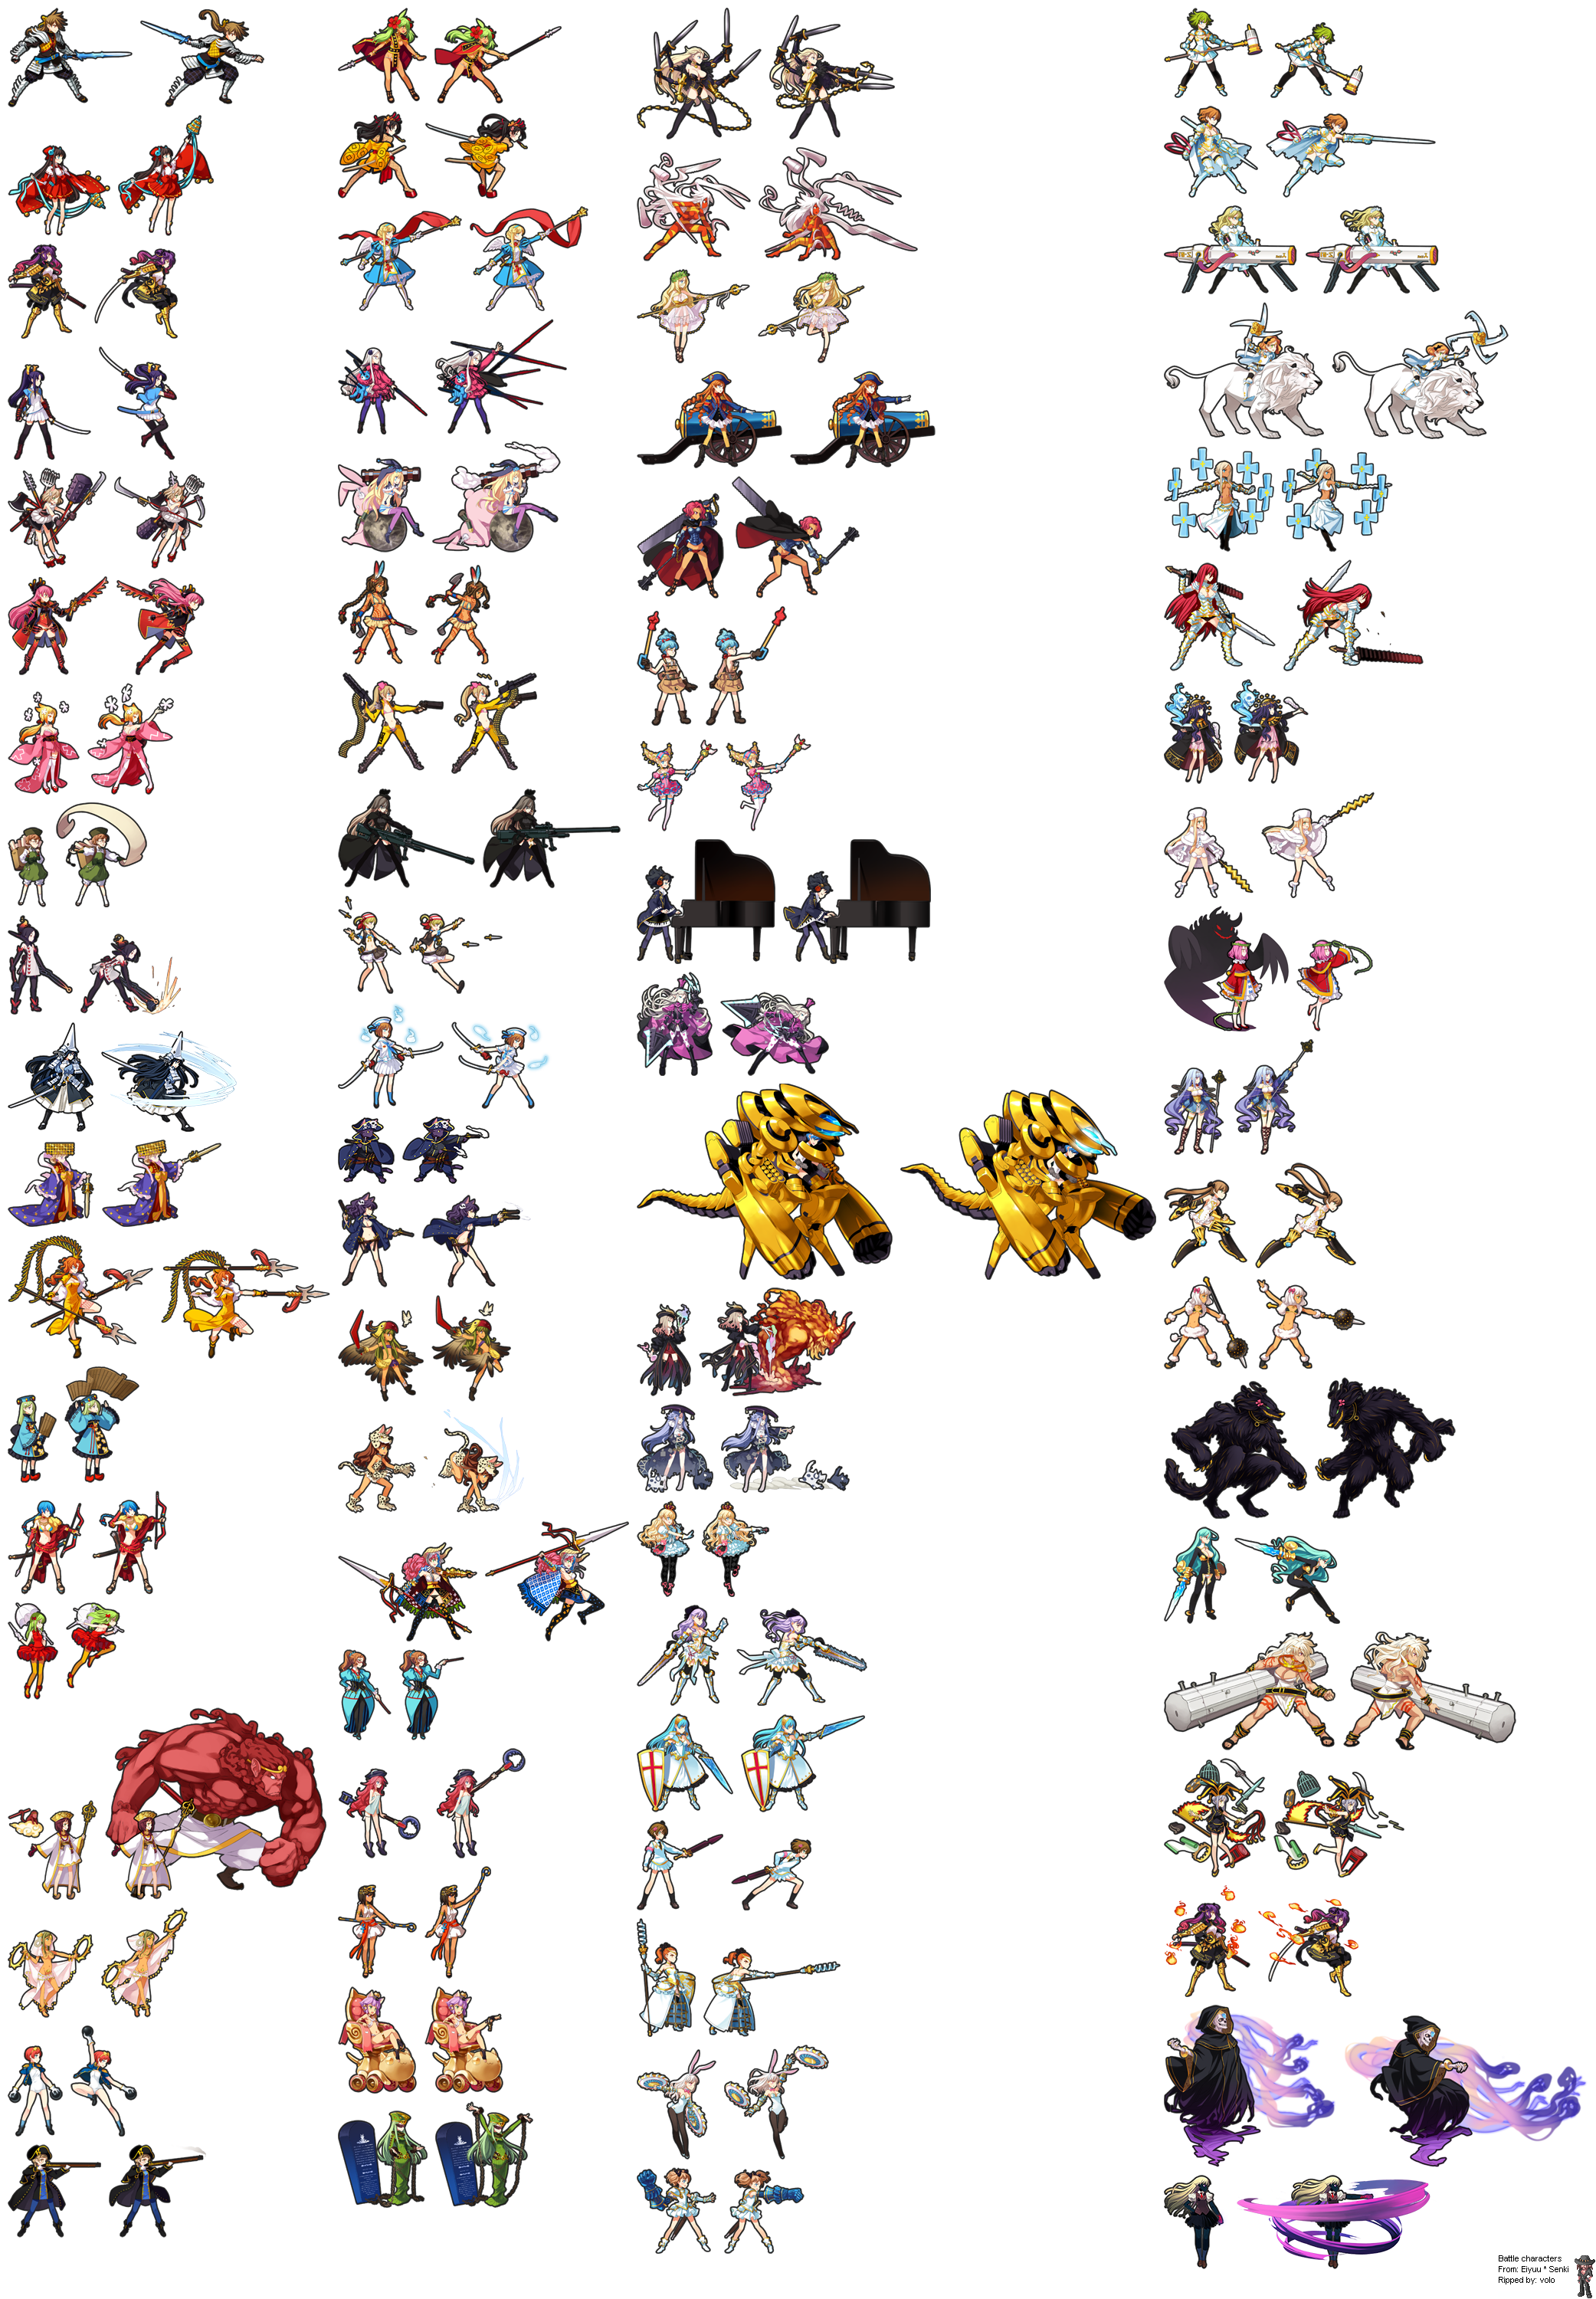 Battle Characters (Main Units)